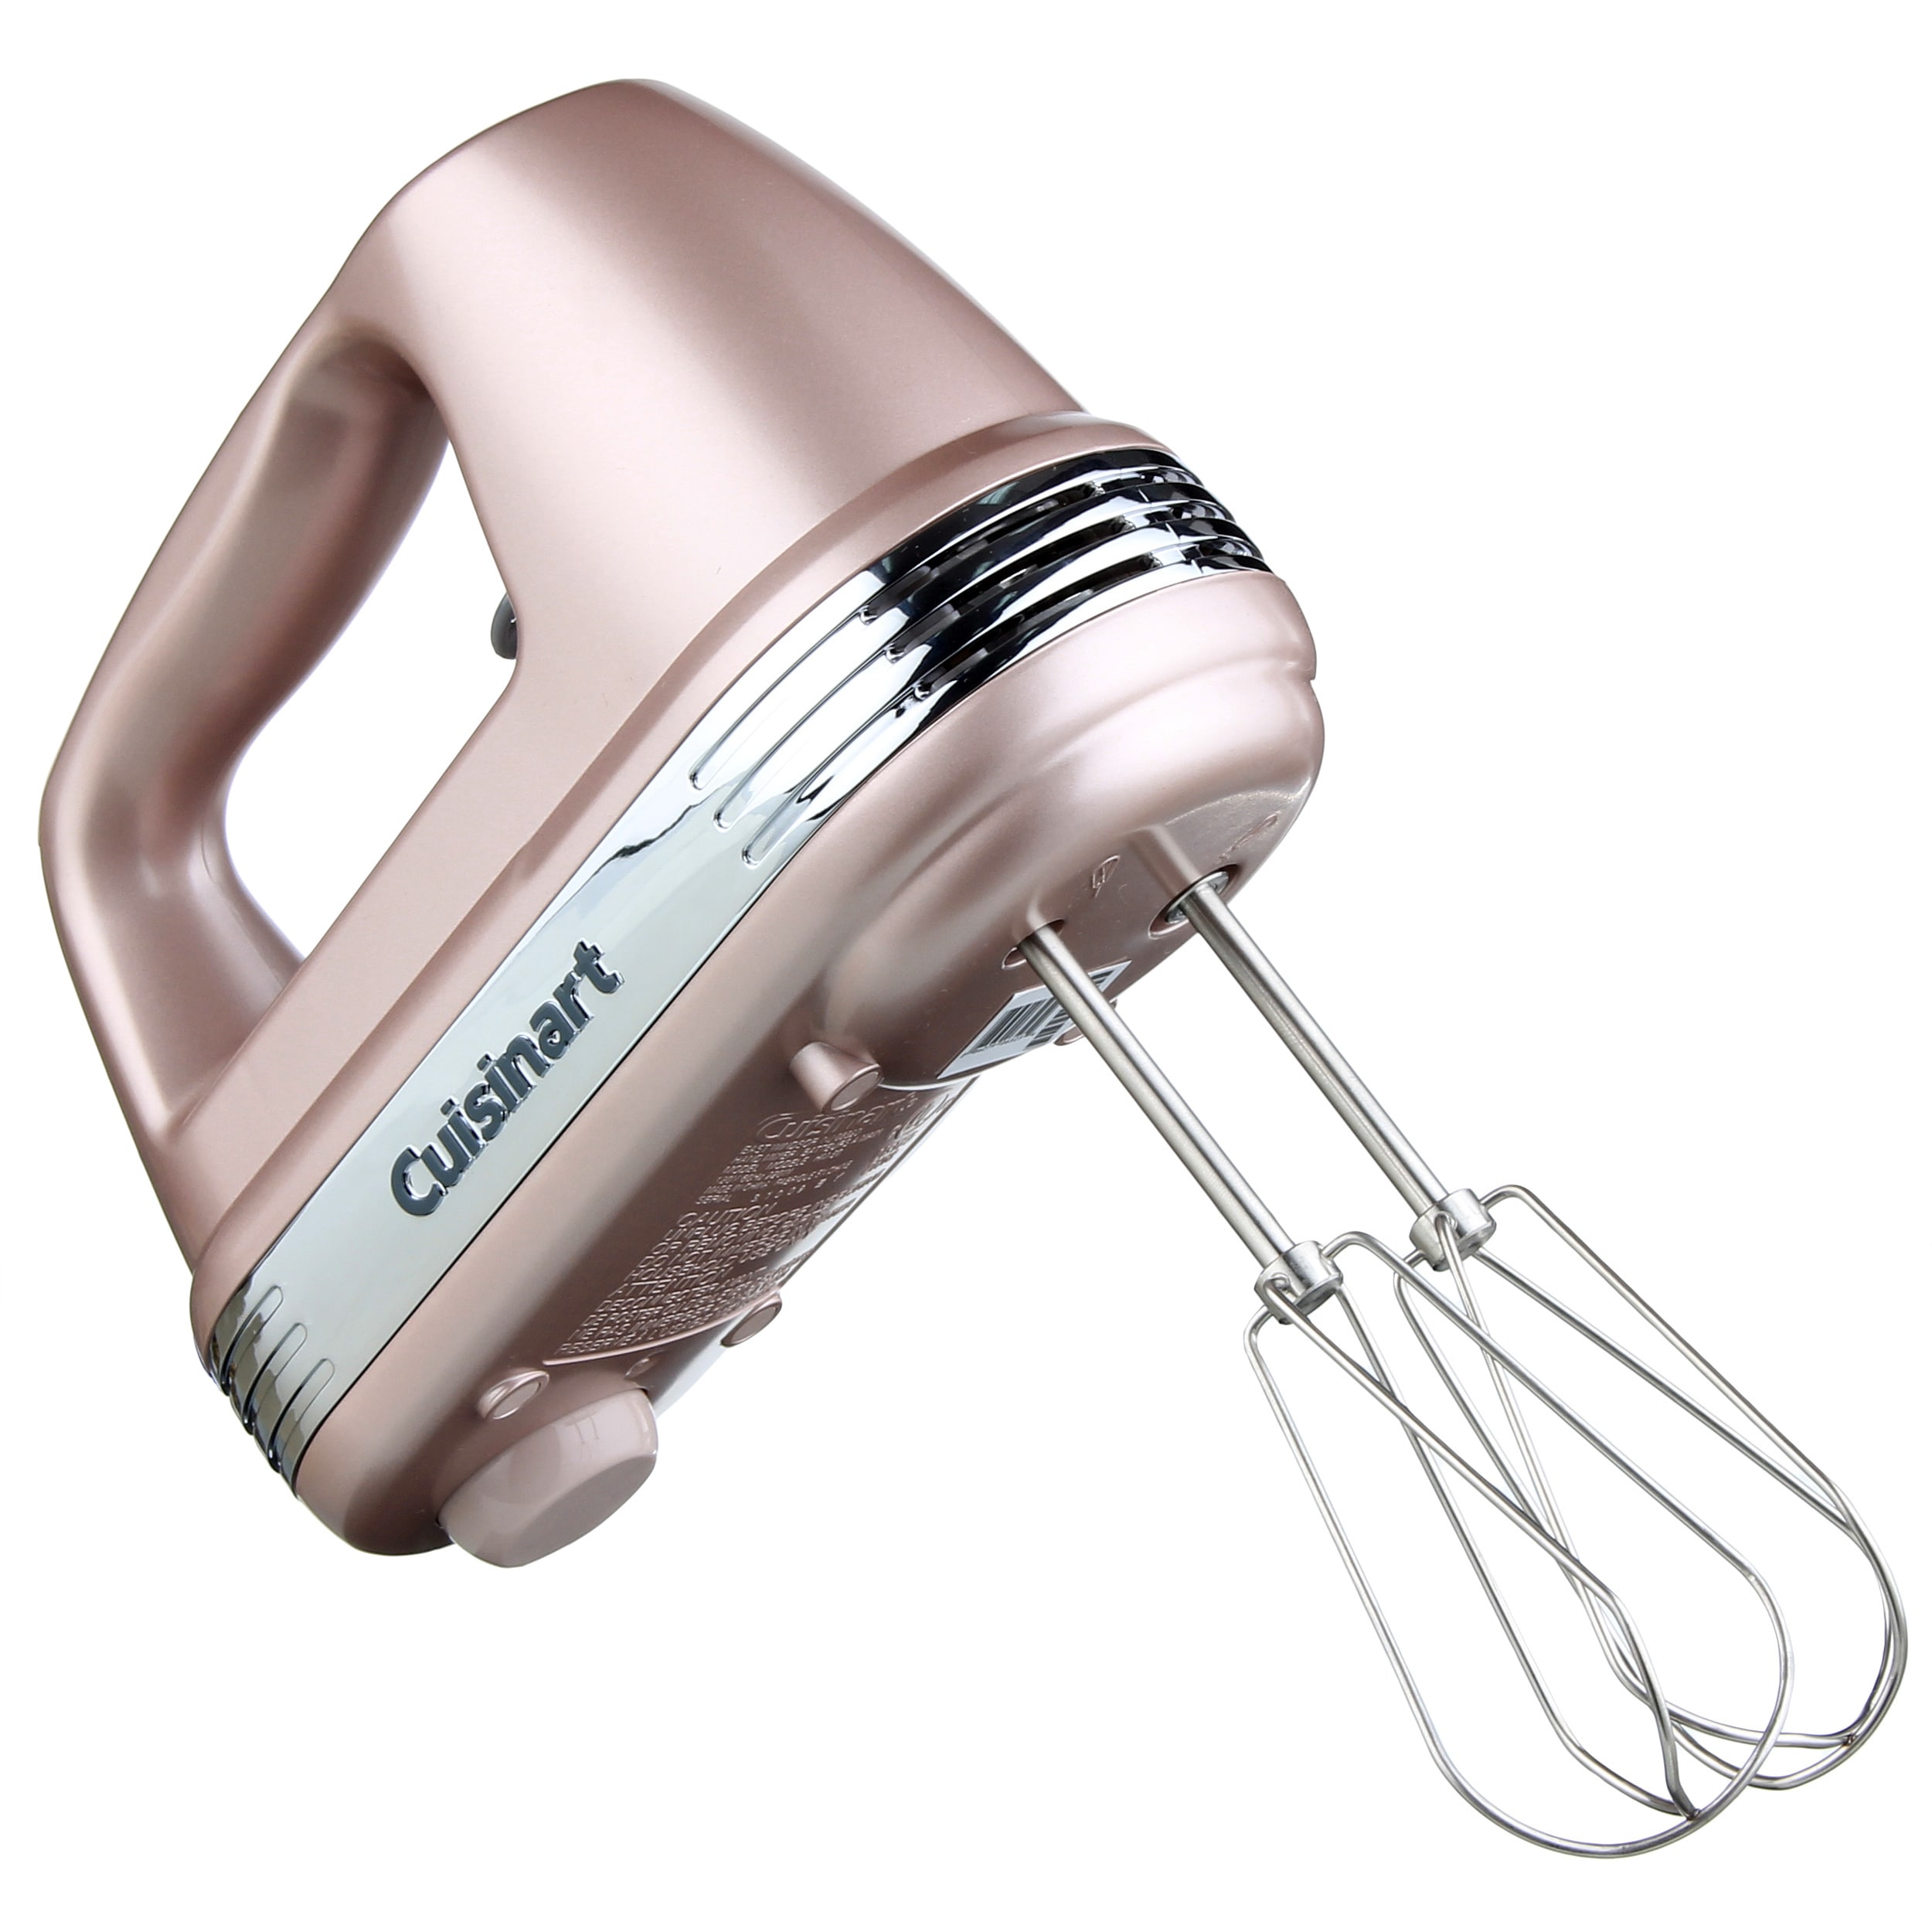 Cuisenart Handheld Mixer Lamp by SmokEy Lights - Marvel Lighting